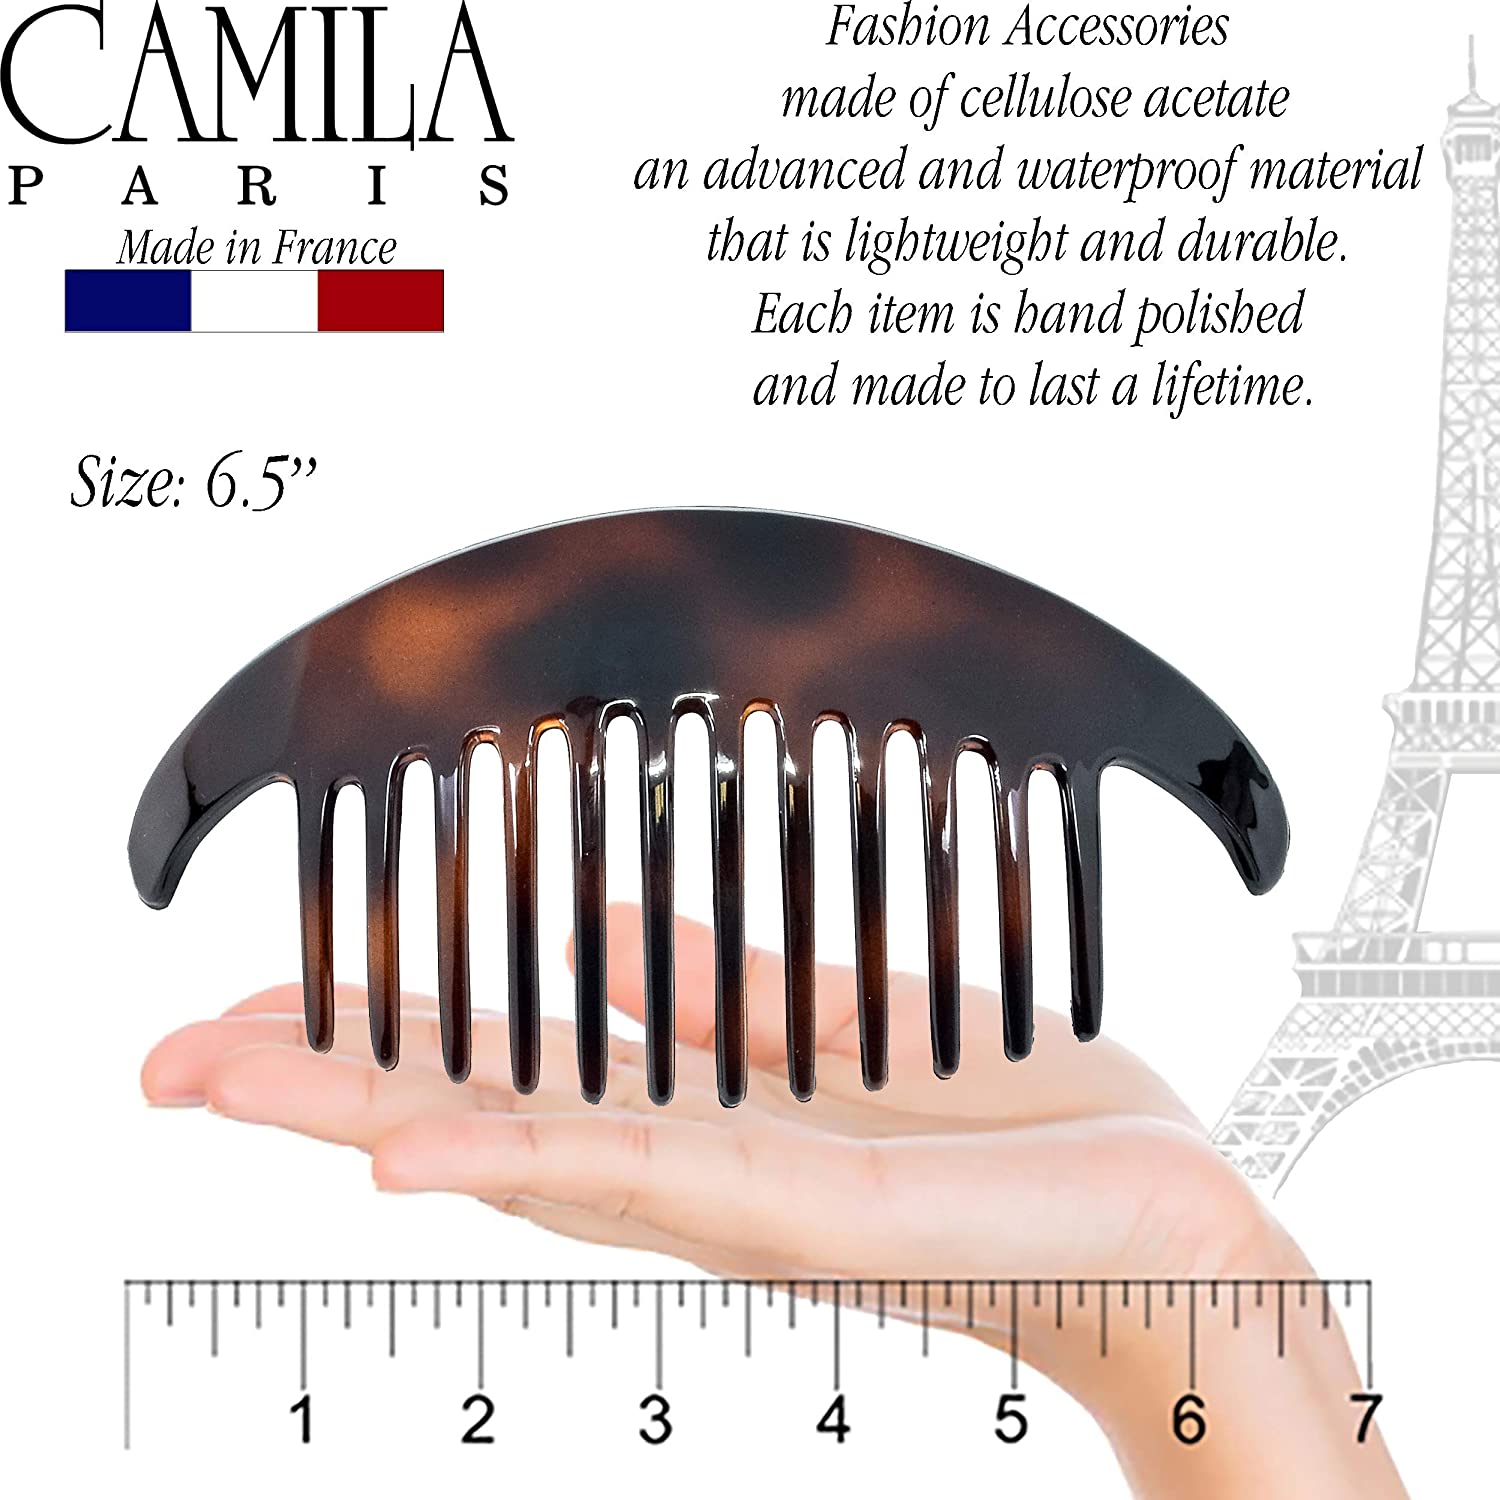 Camila Paris Hair Side Combs Large Grip Pair